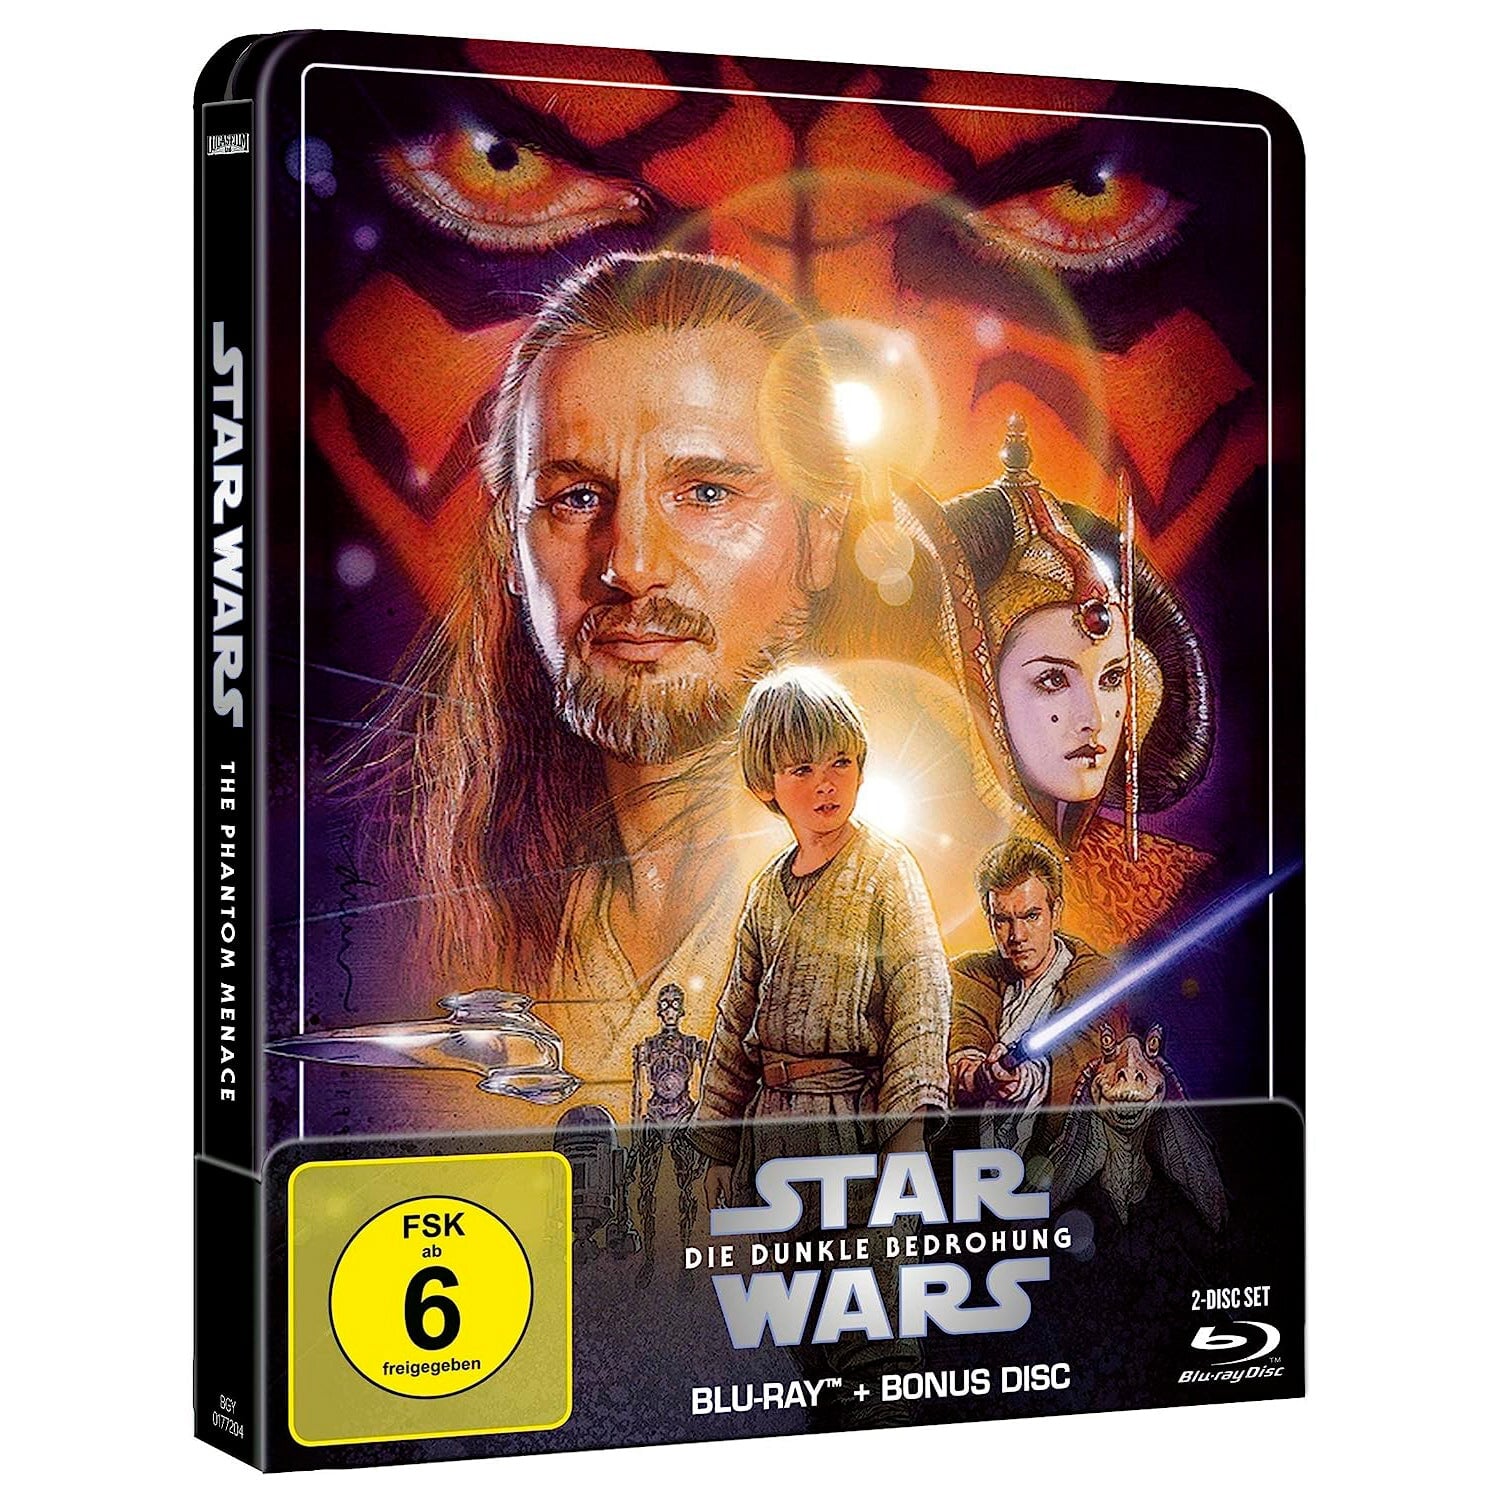 Звёздные войны: Эпизод I – Скрытая угроза (англ. язык) (Blu-ray + Бонусный диск) Steelbook